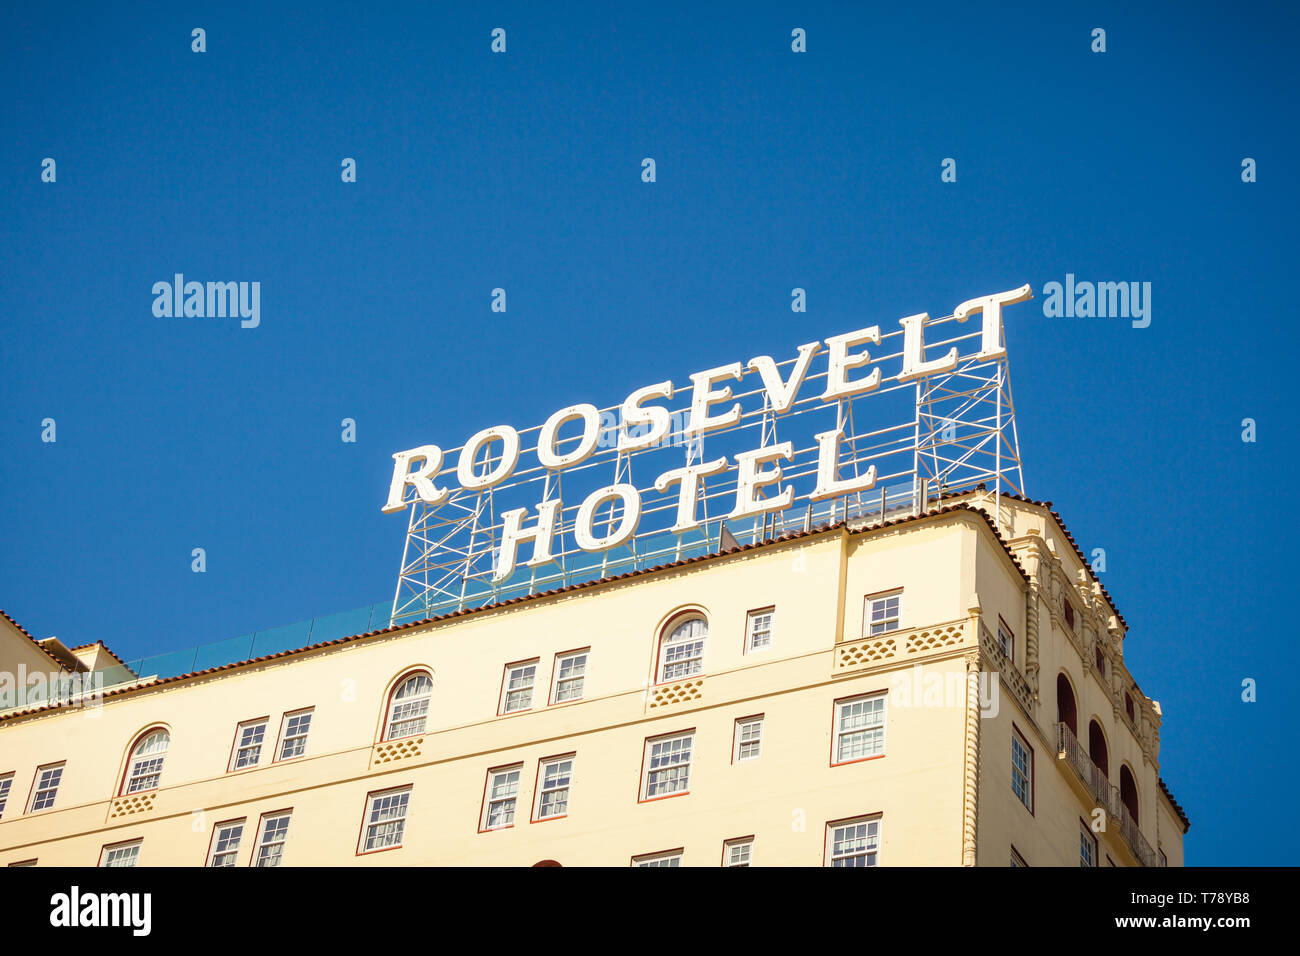 HOLLYWOOD, USA - May 29, 2018: die Fassade des berühmten historischen Roosevelt Hotel am Juli 29,2018 in Hollywood, USA. Stockfoto